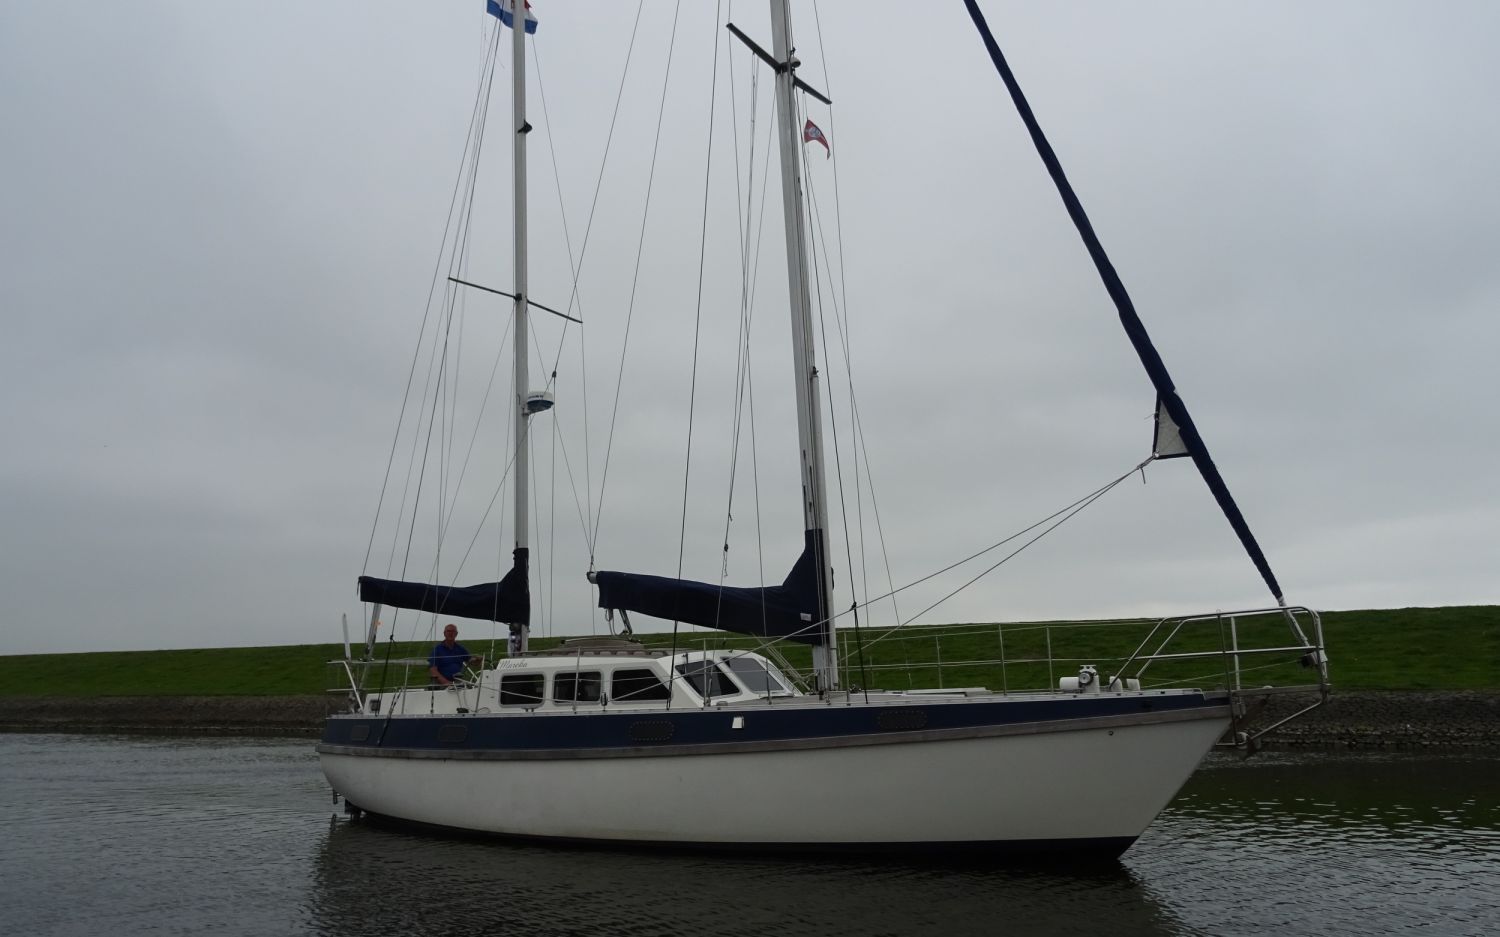 Colvic Victor 40, Zeiljacht for sale by HollandBoat International Yachtbrokers